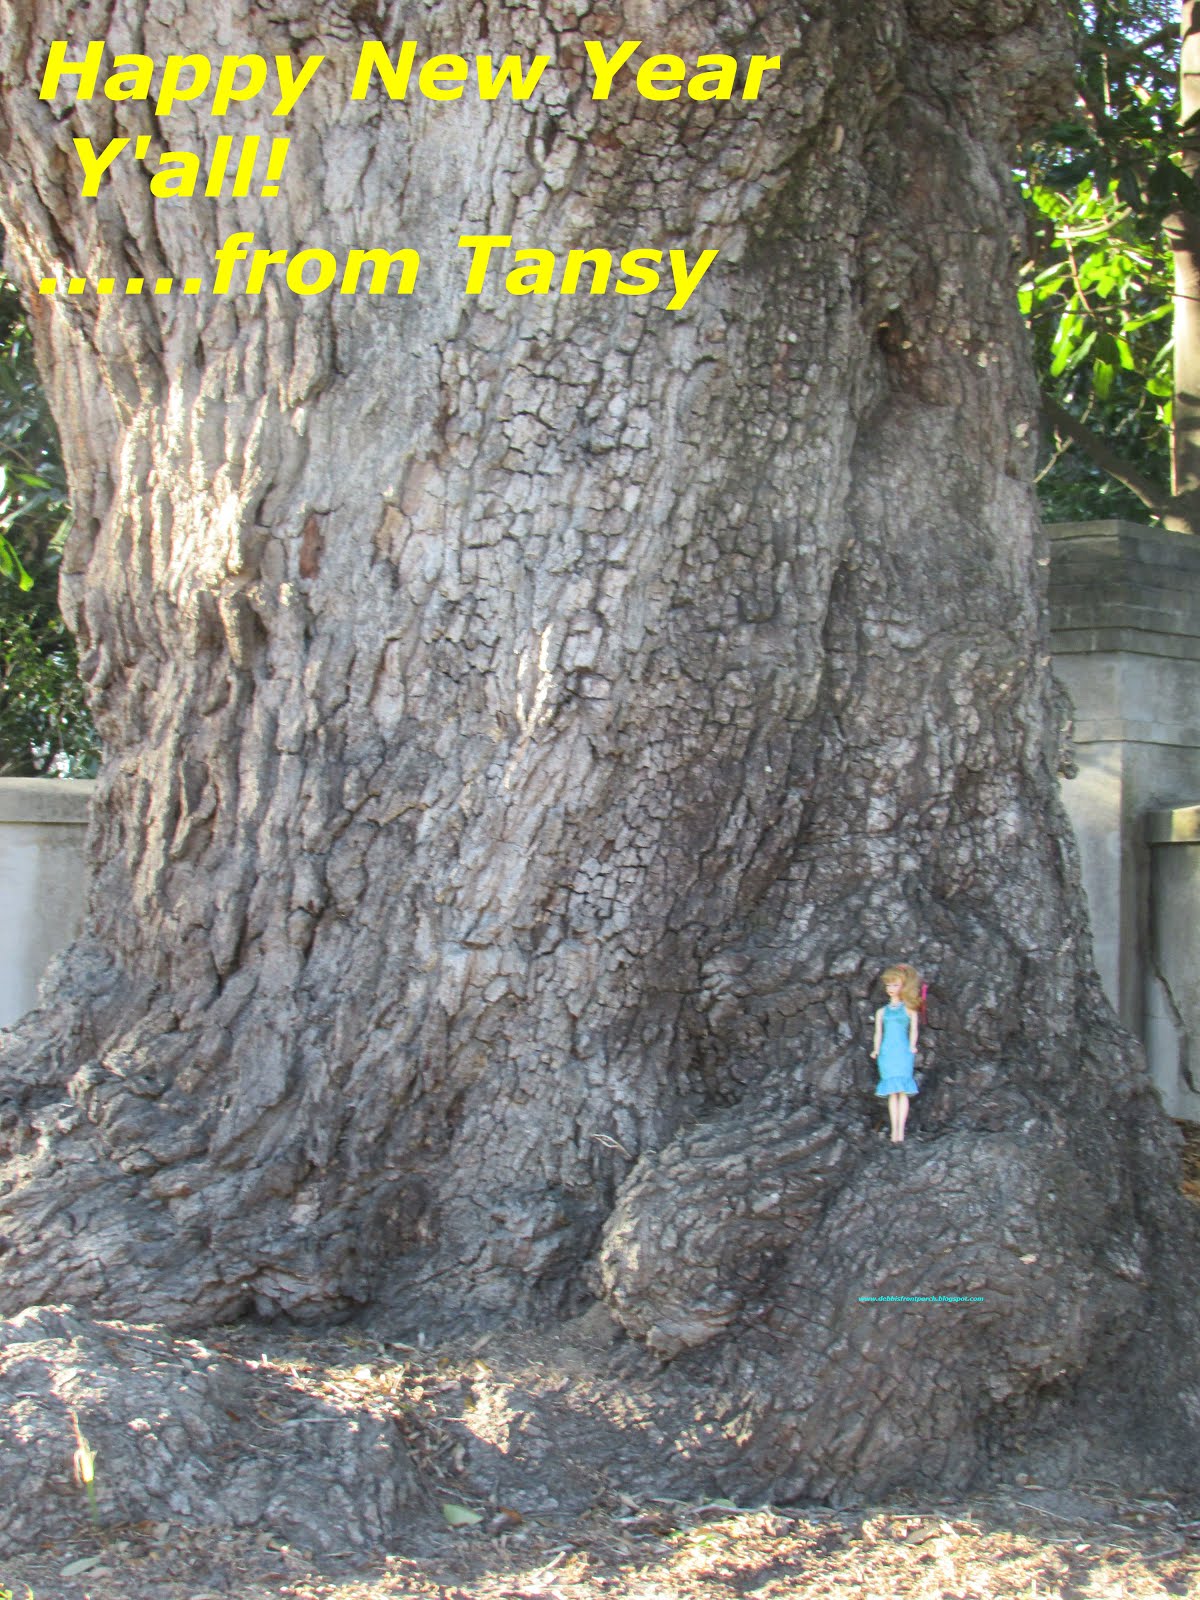 Tansy's Adventures